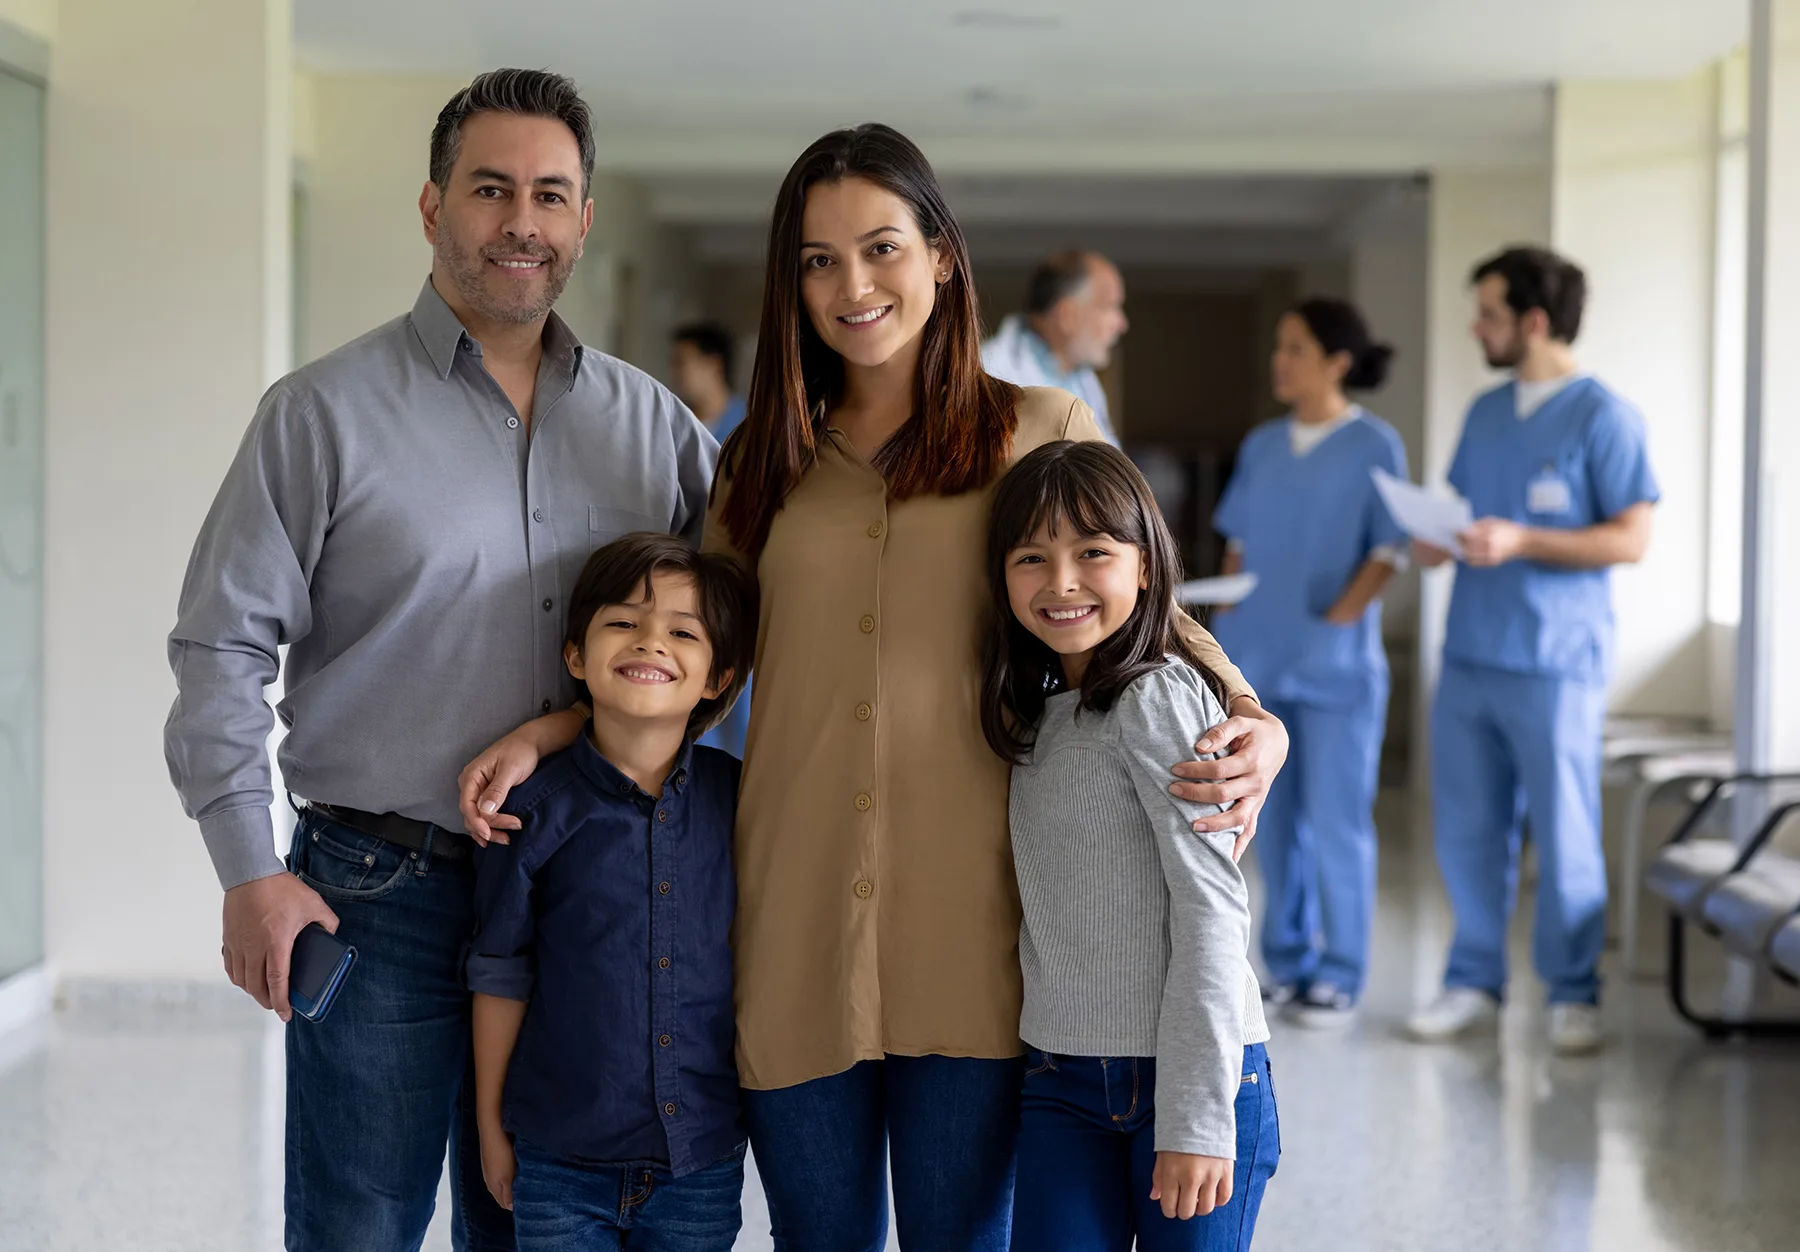 A family walks in a hospital